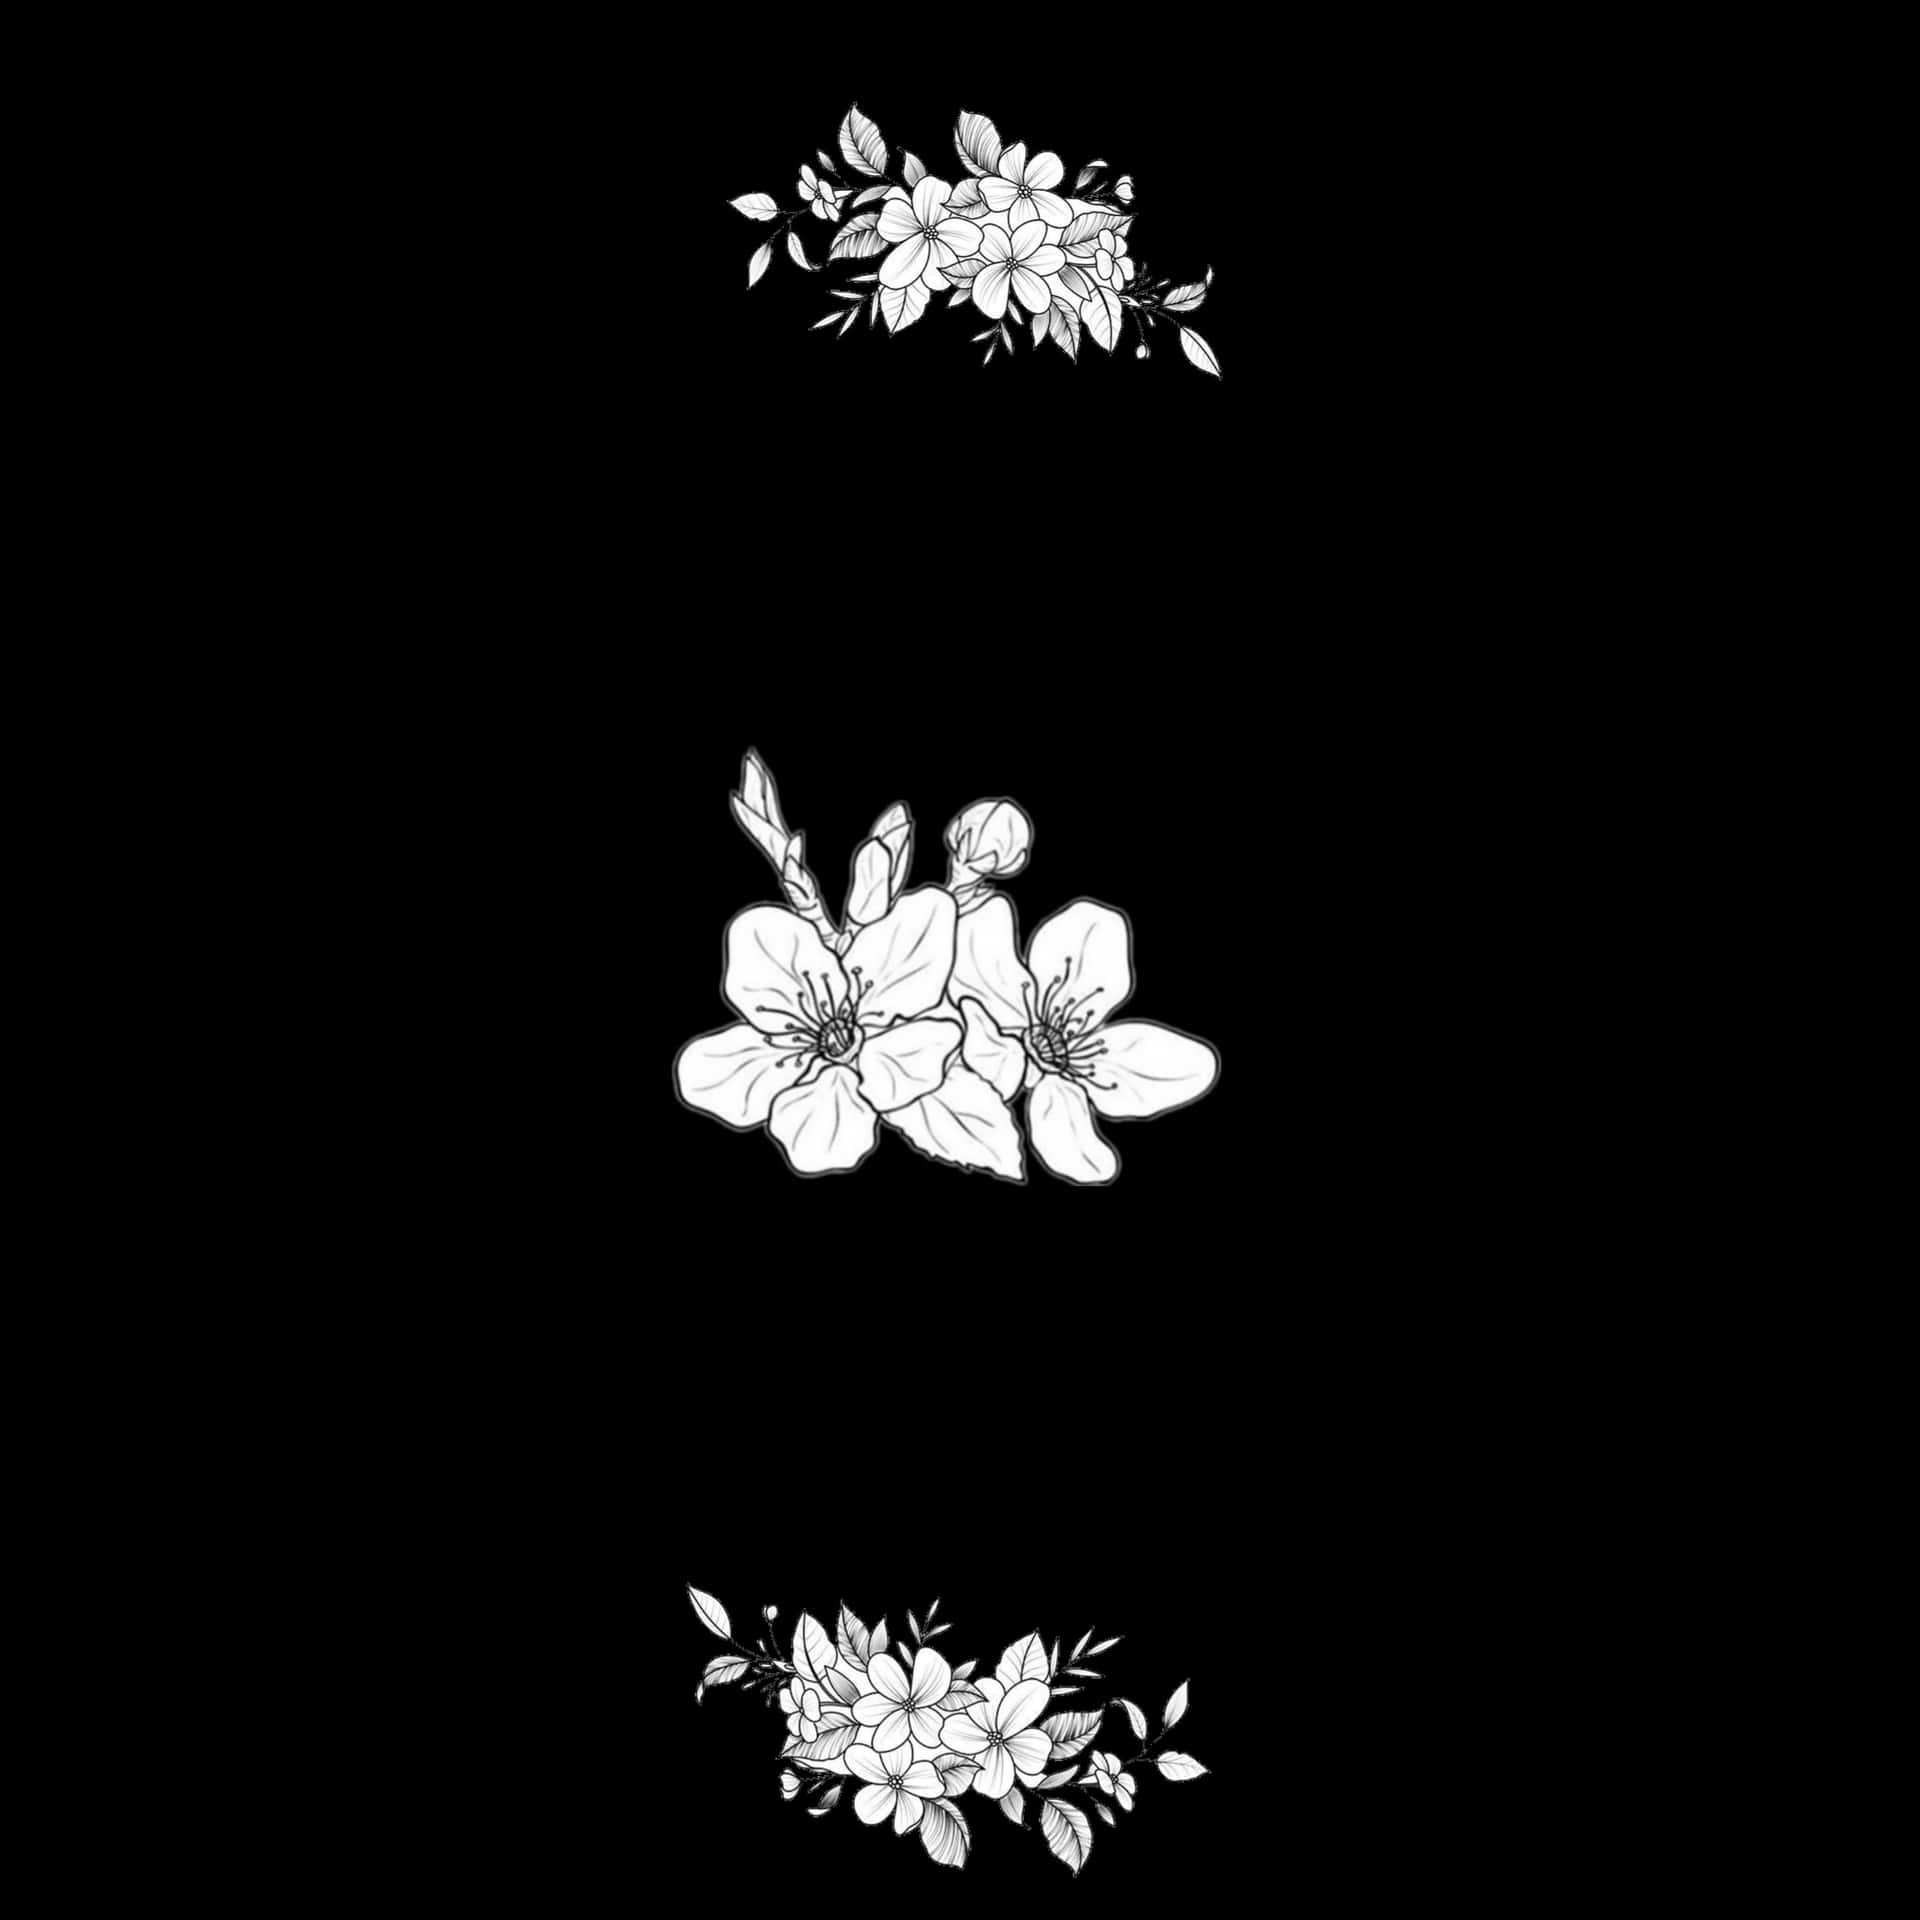 Unfondo Negro Con Flores Blancas En Él